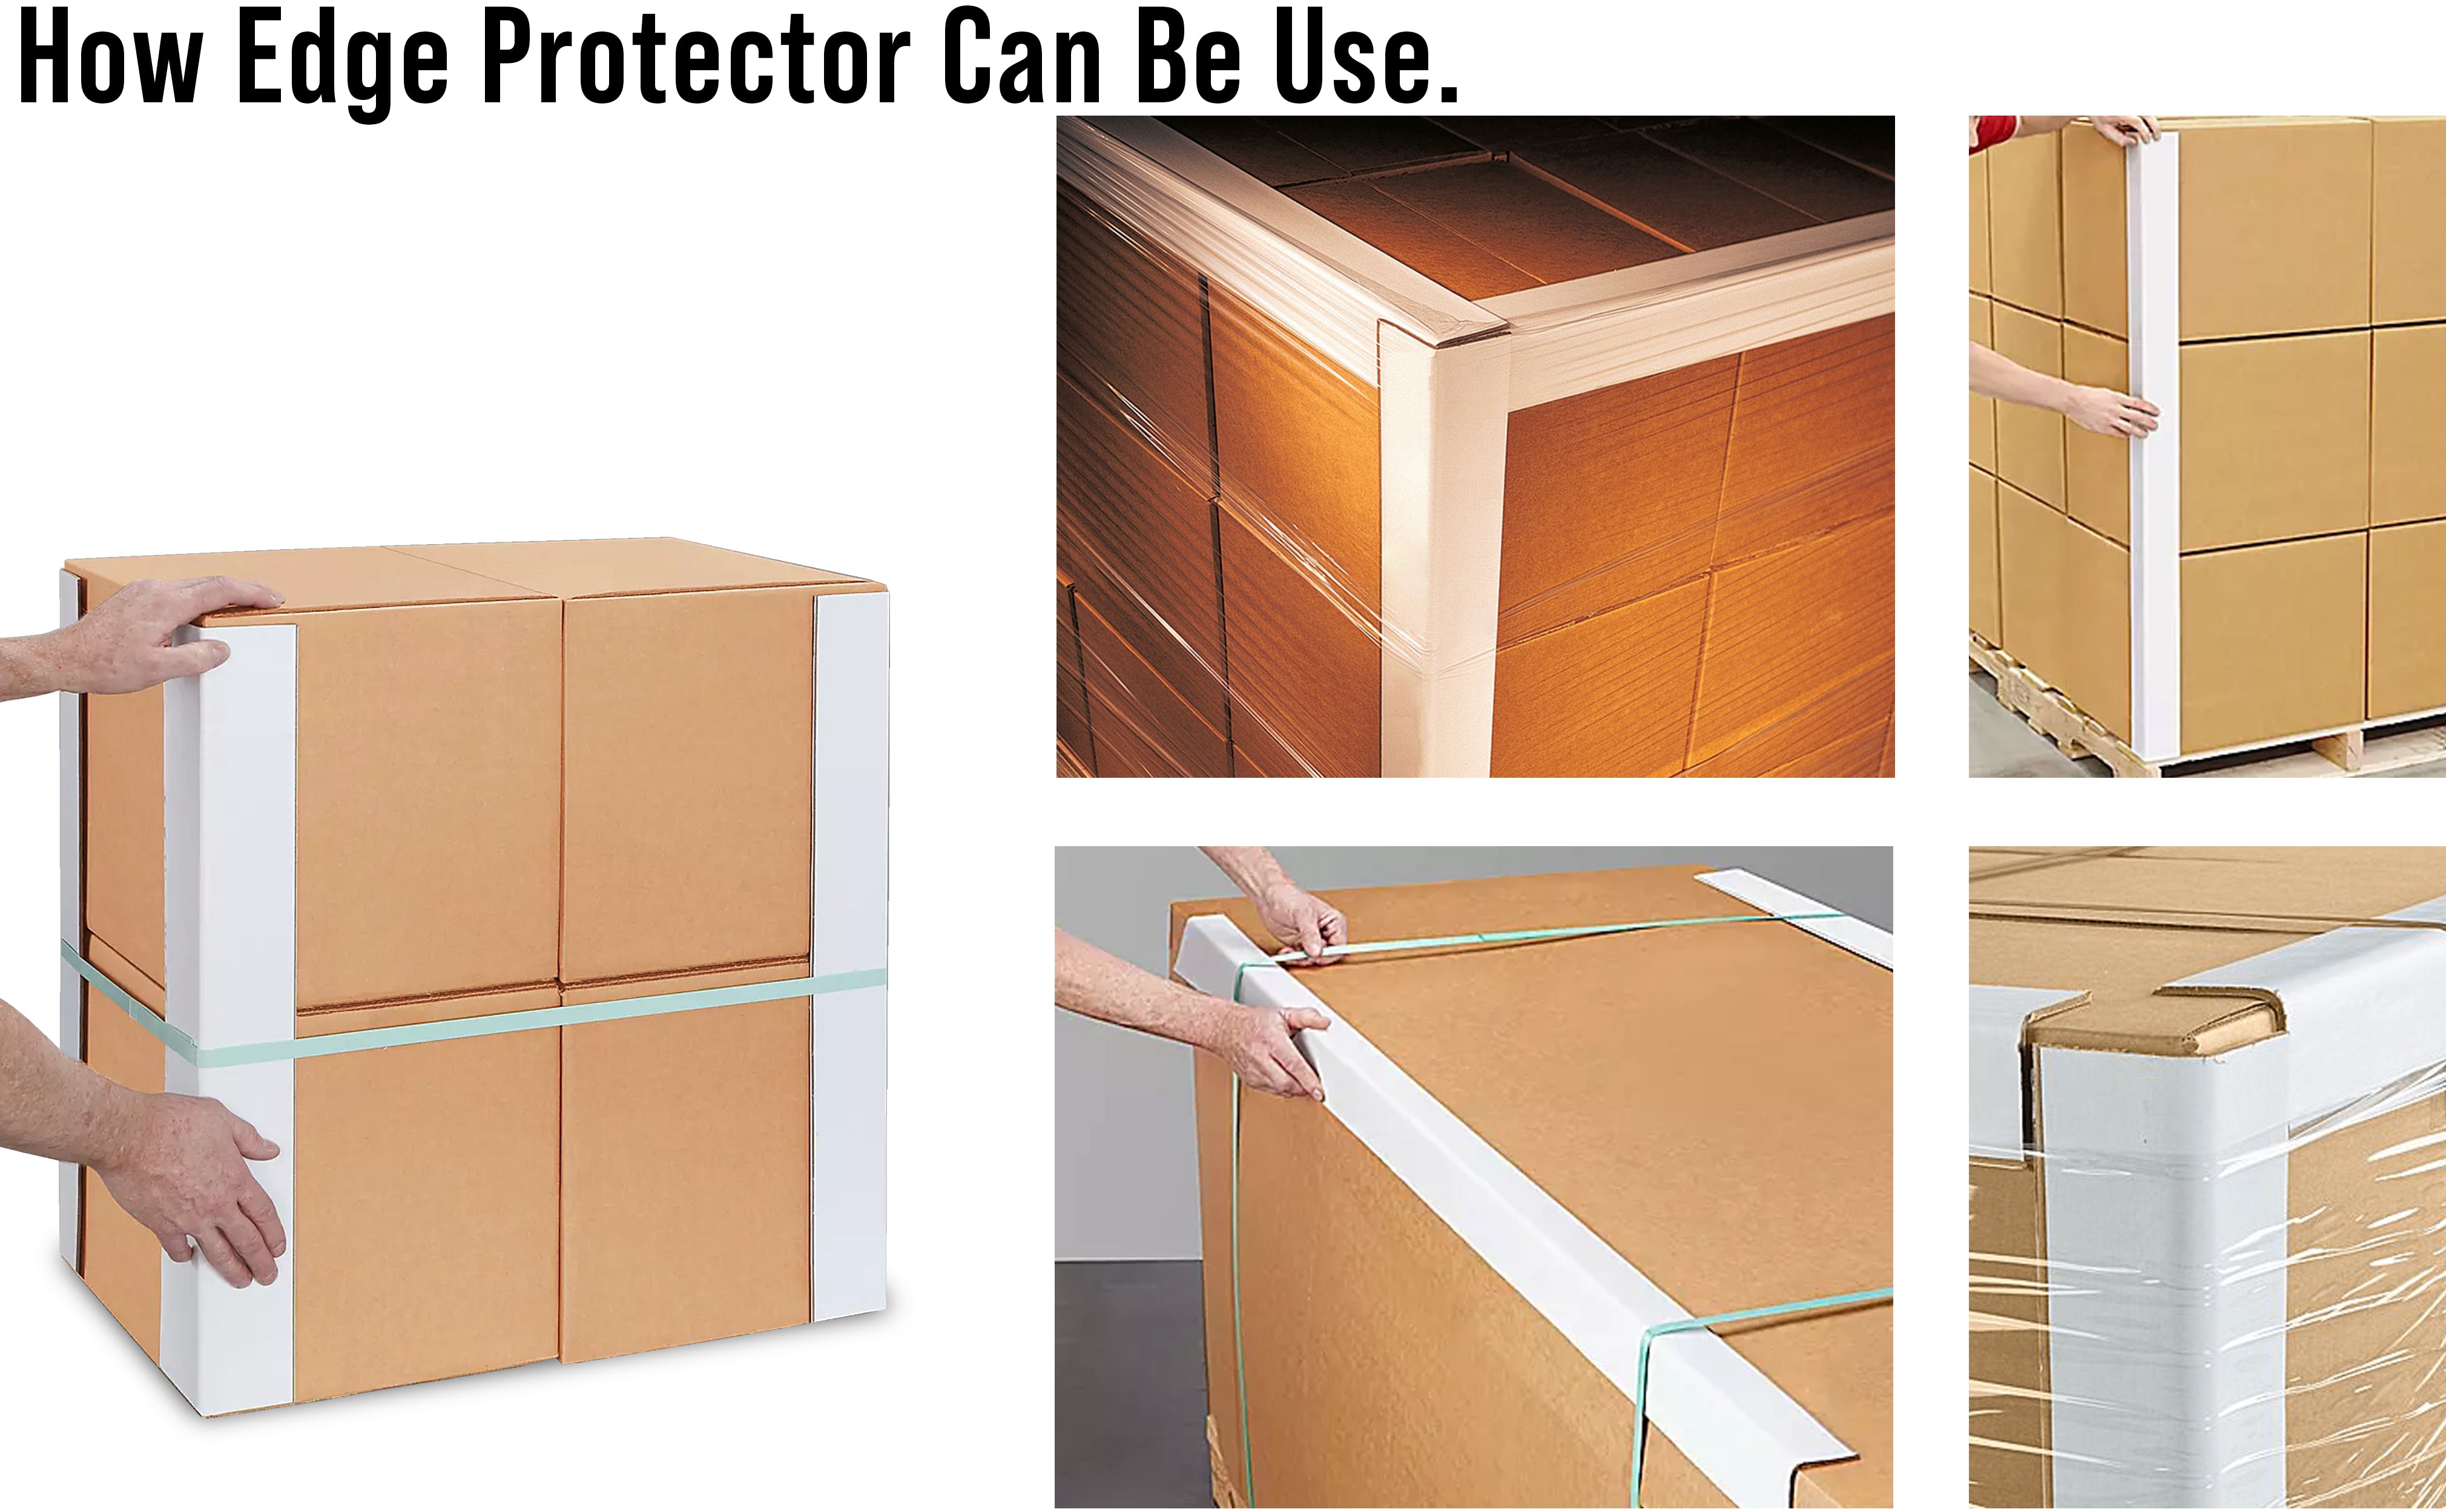 Cardboard Edge Protectors 24'' X 2'' X 2'' Pack of 50 cardboard protec –  5Seconds Brand